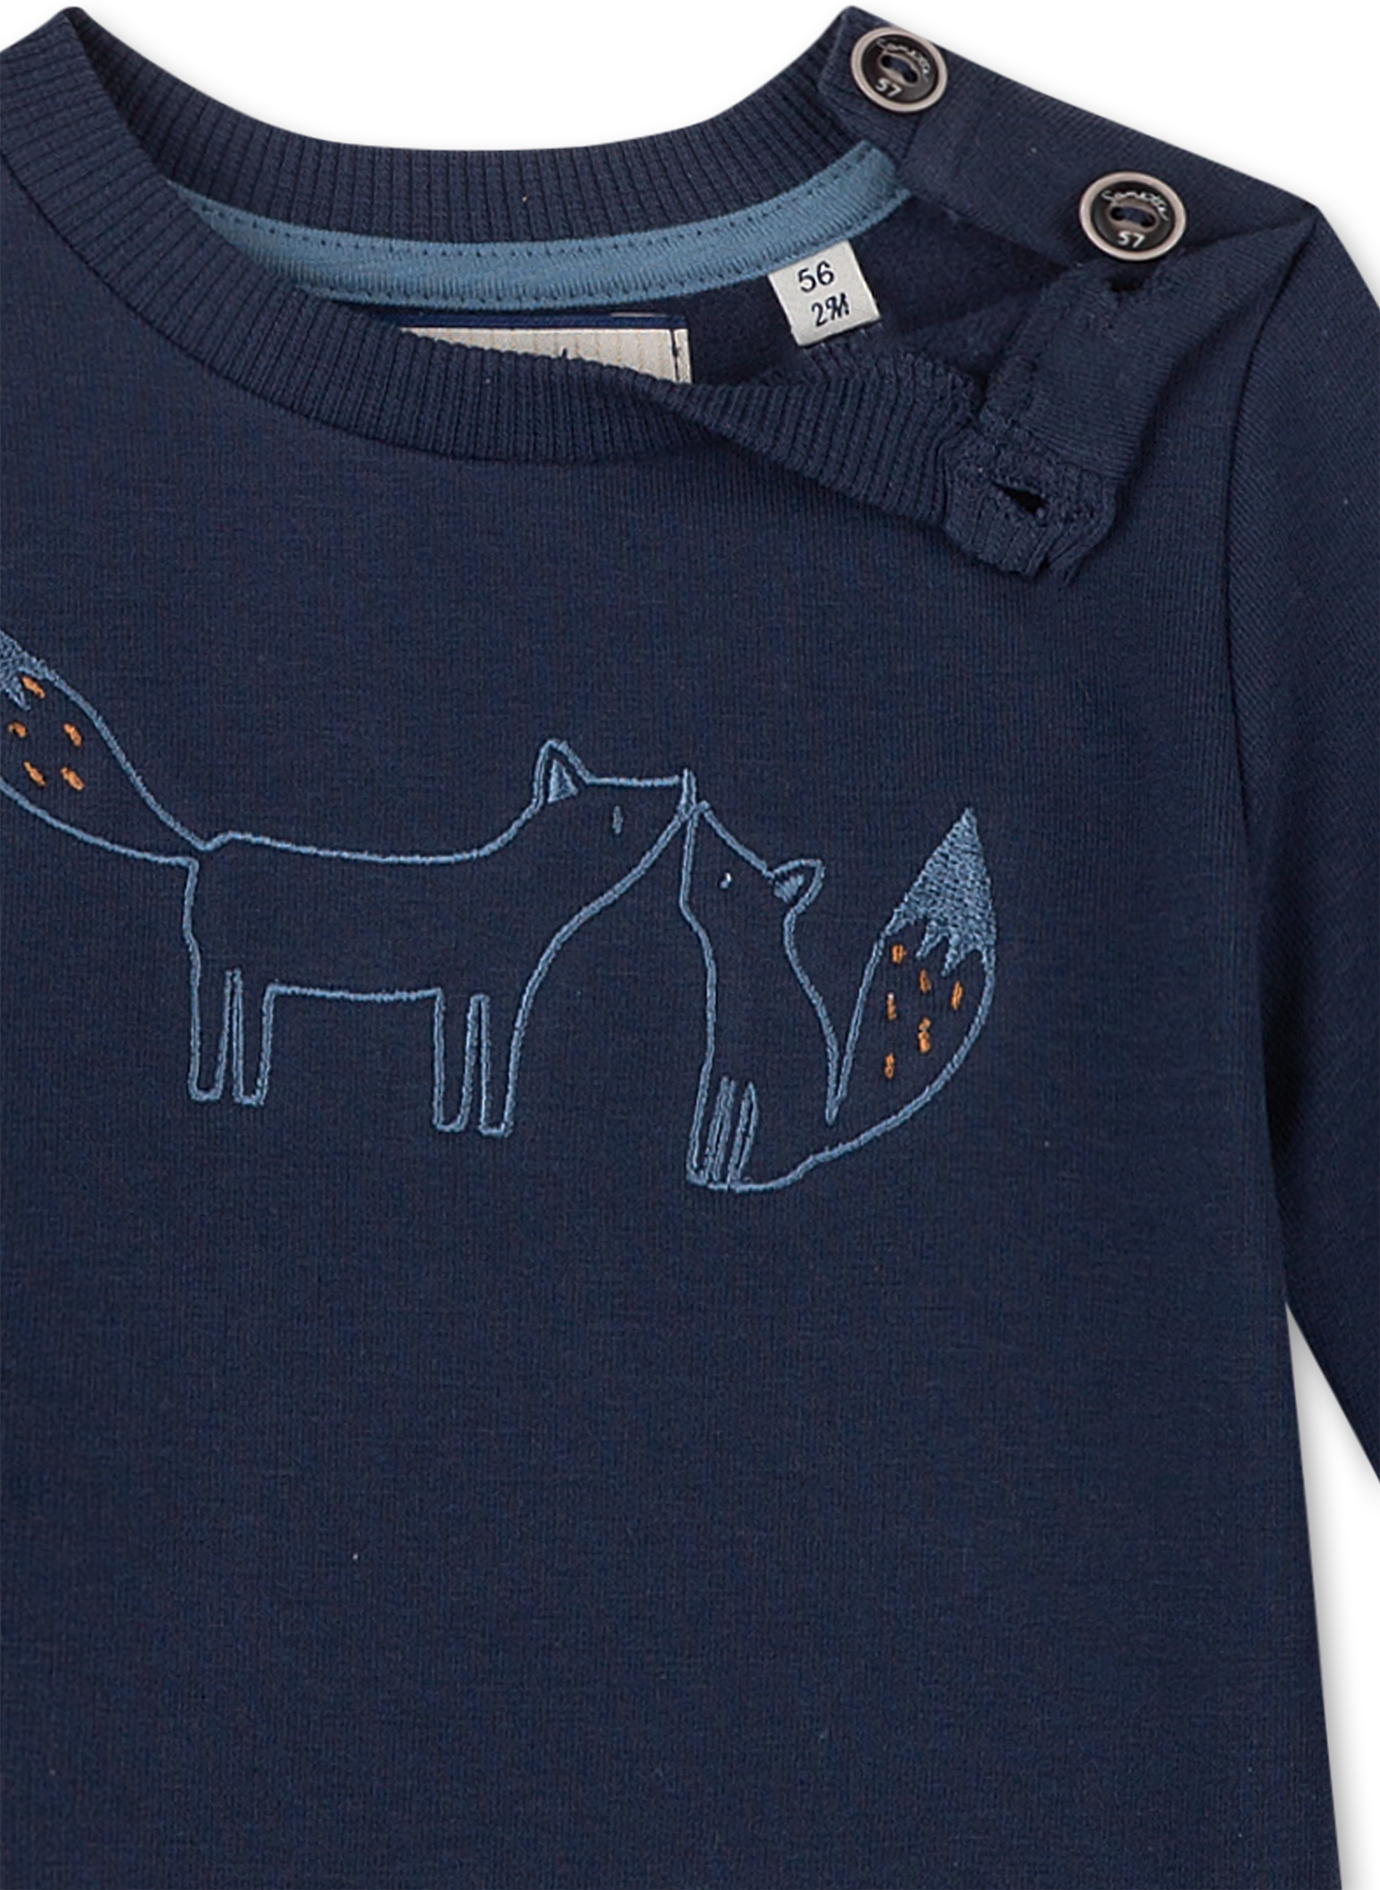 Jungen-Sweatshirt Blau Clever Fox